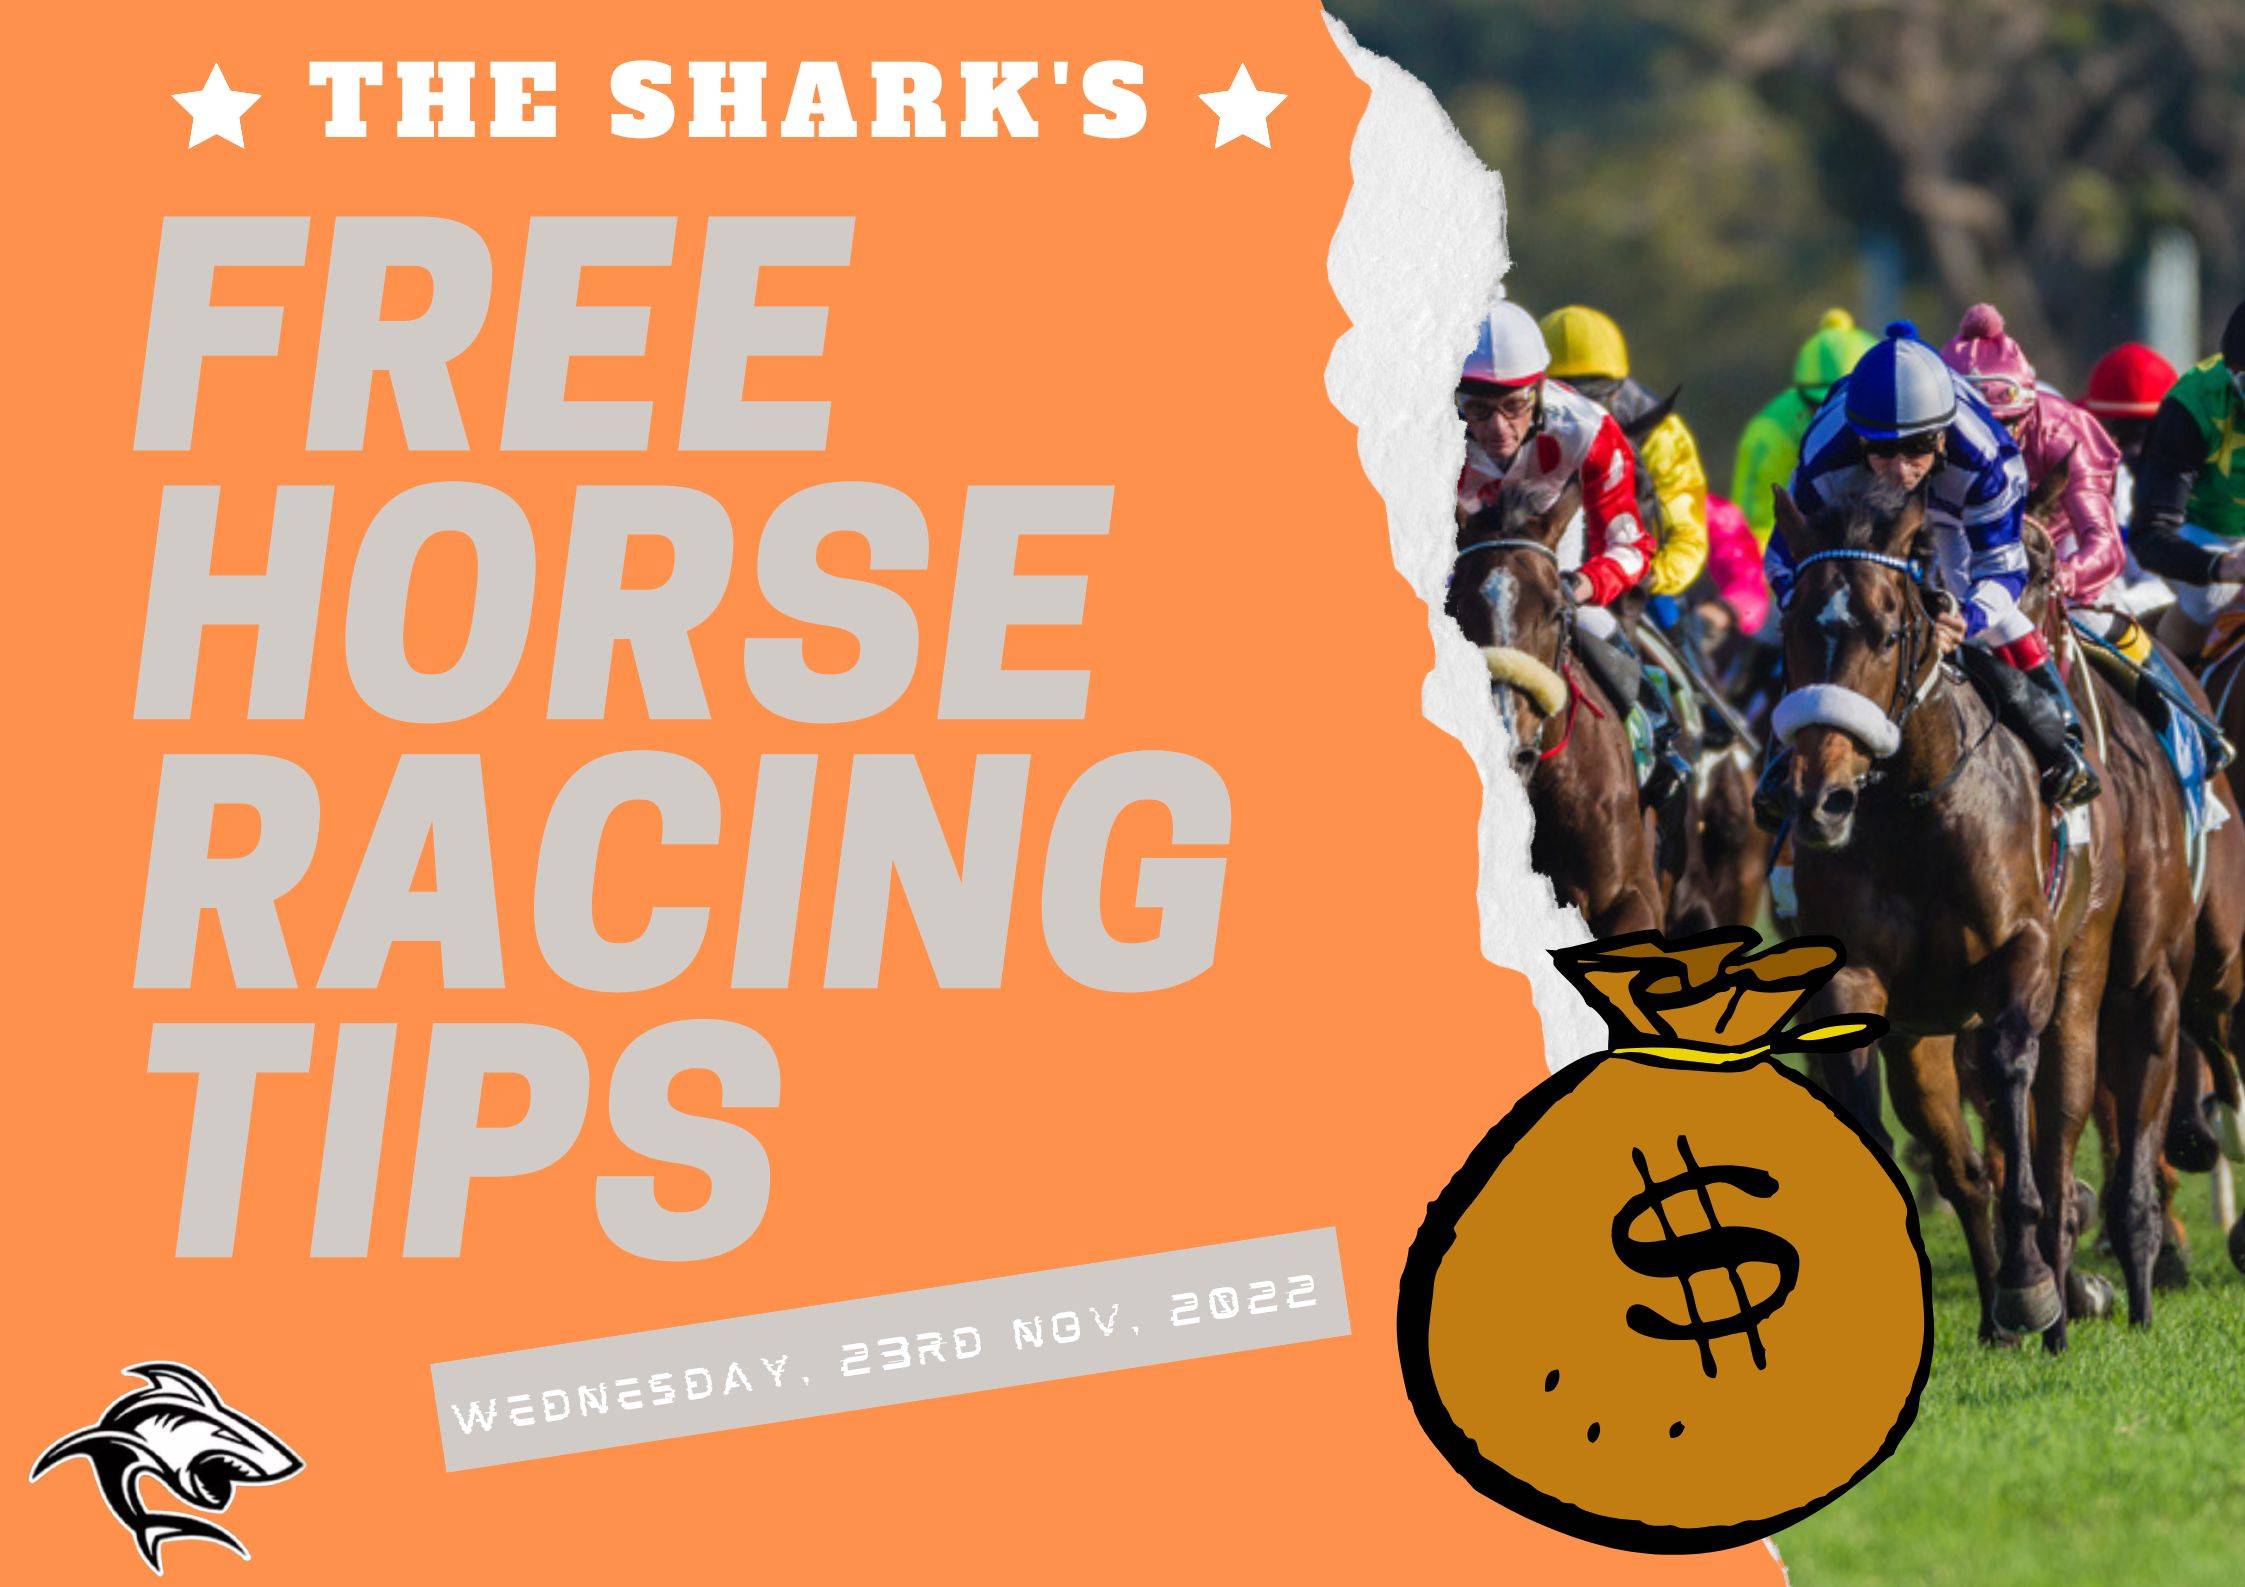 Free Horse Racing Tips - 23rd Nov